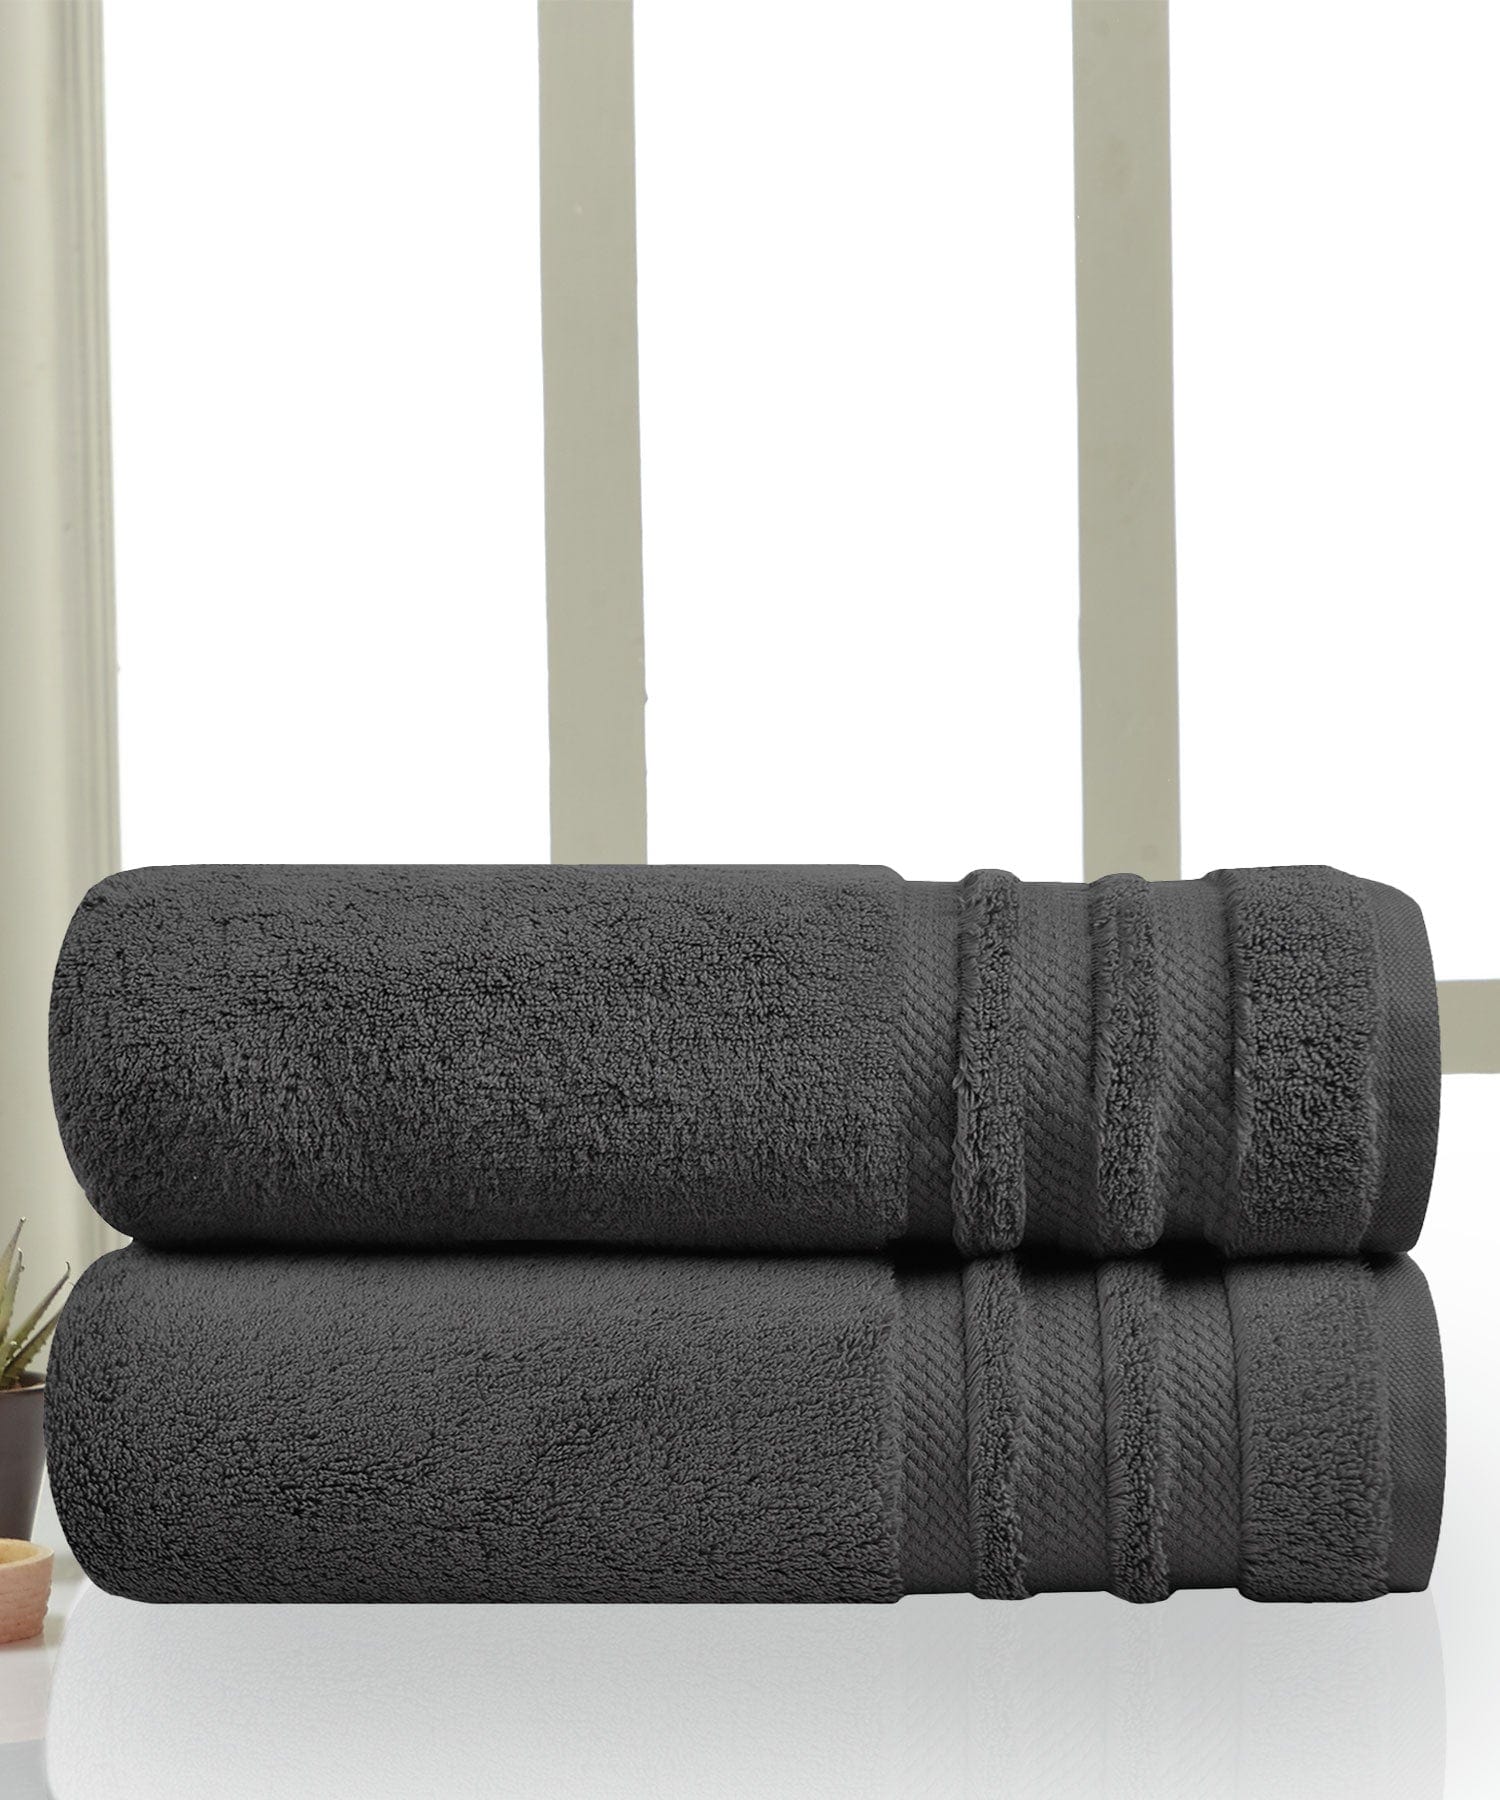 2 Pieces Bath Towels ₹1919/-